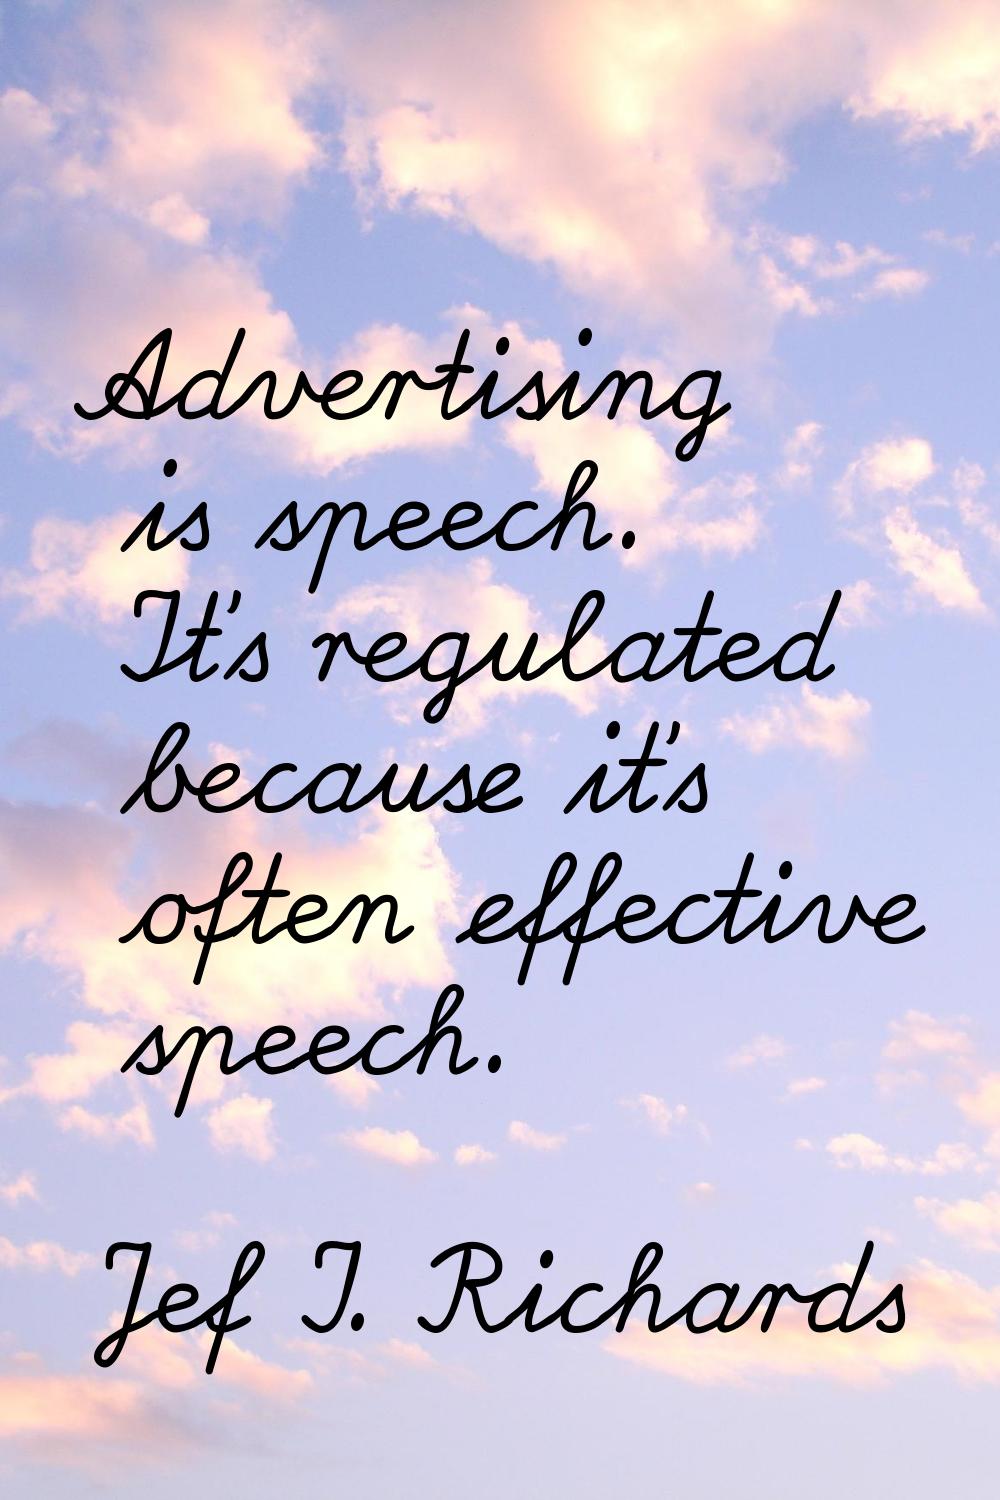 Advertising is speech. It's regulated because it's often effective speech.